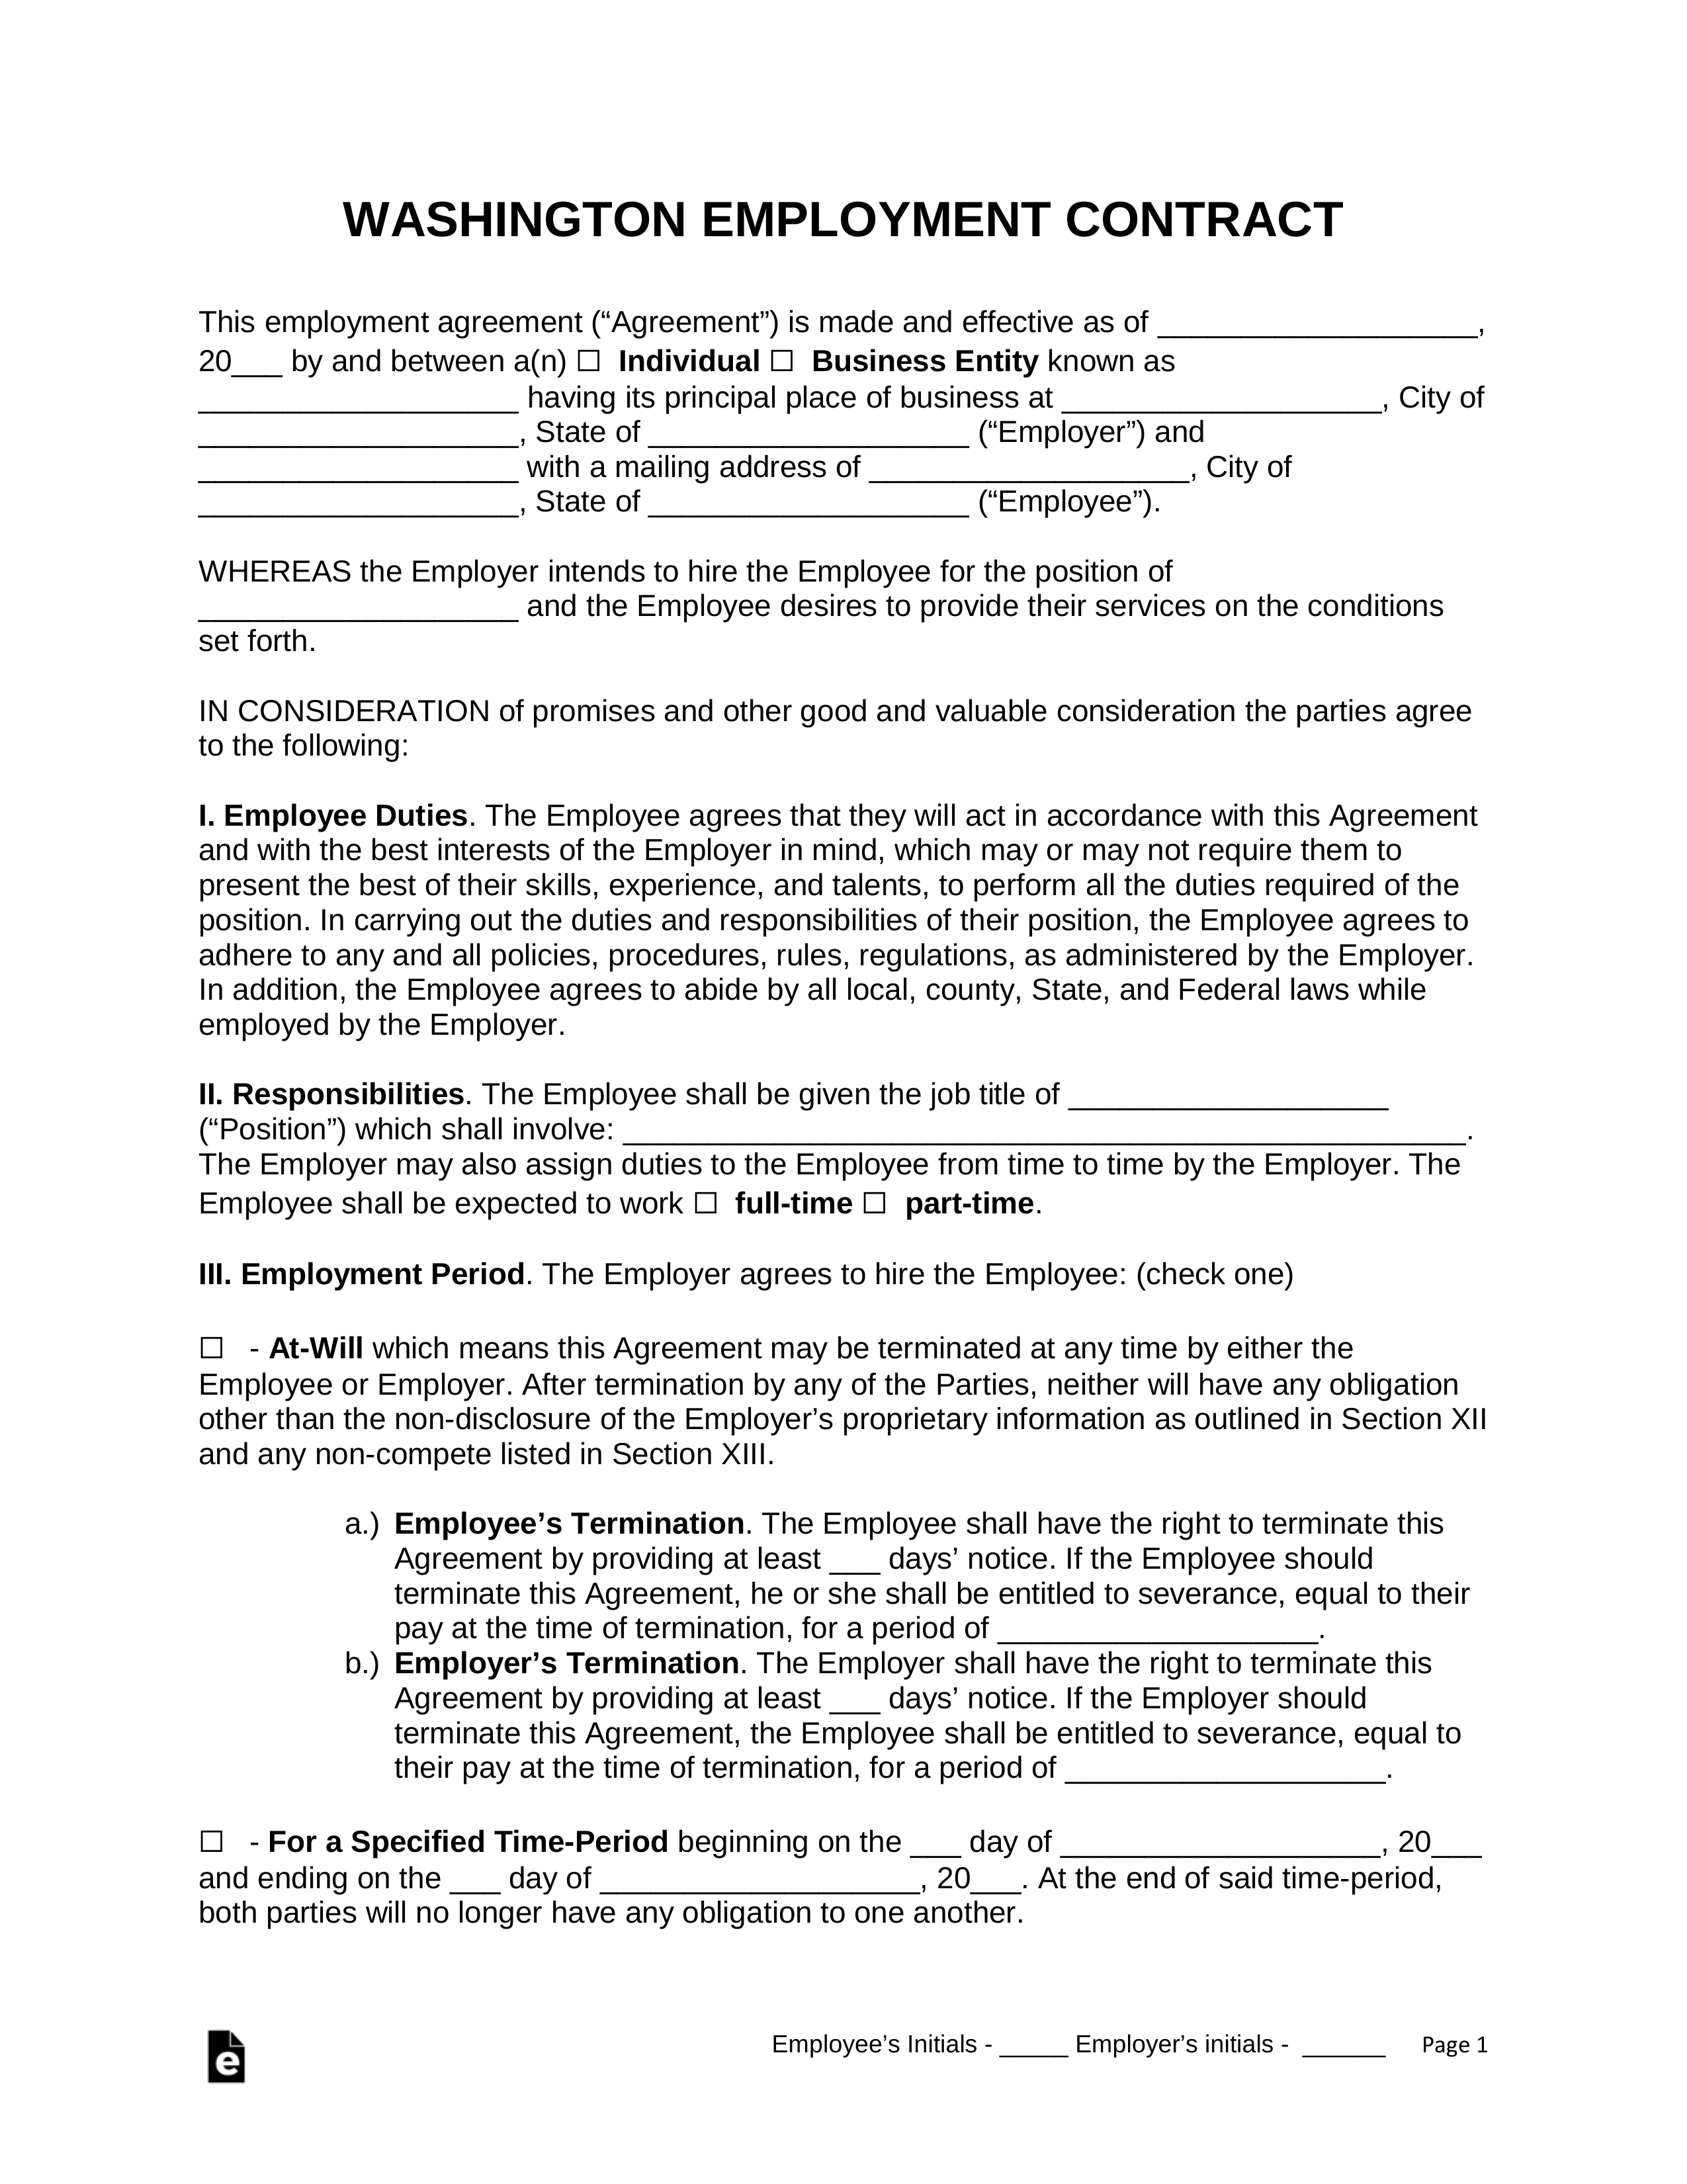 Washington Employment Contract Templates (4)